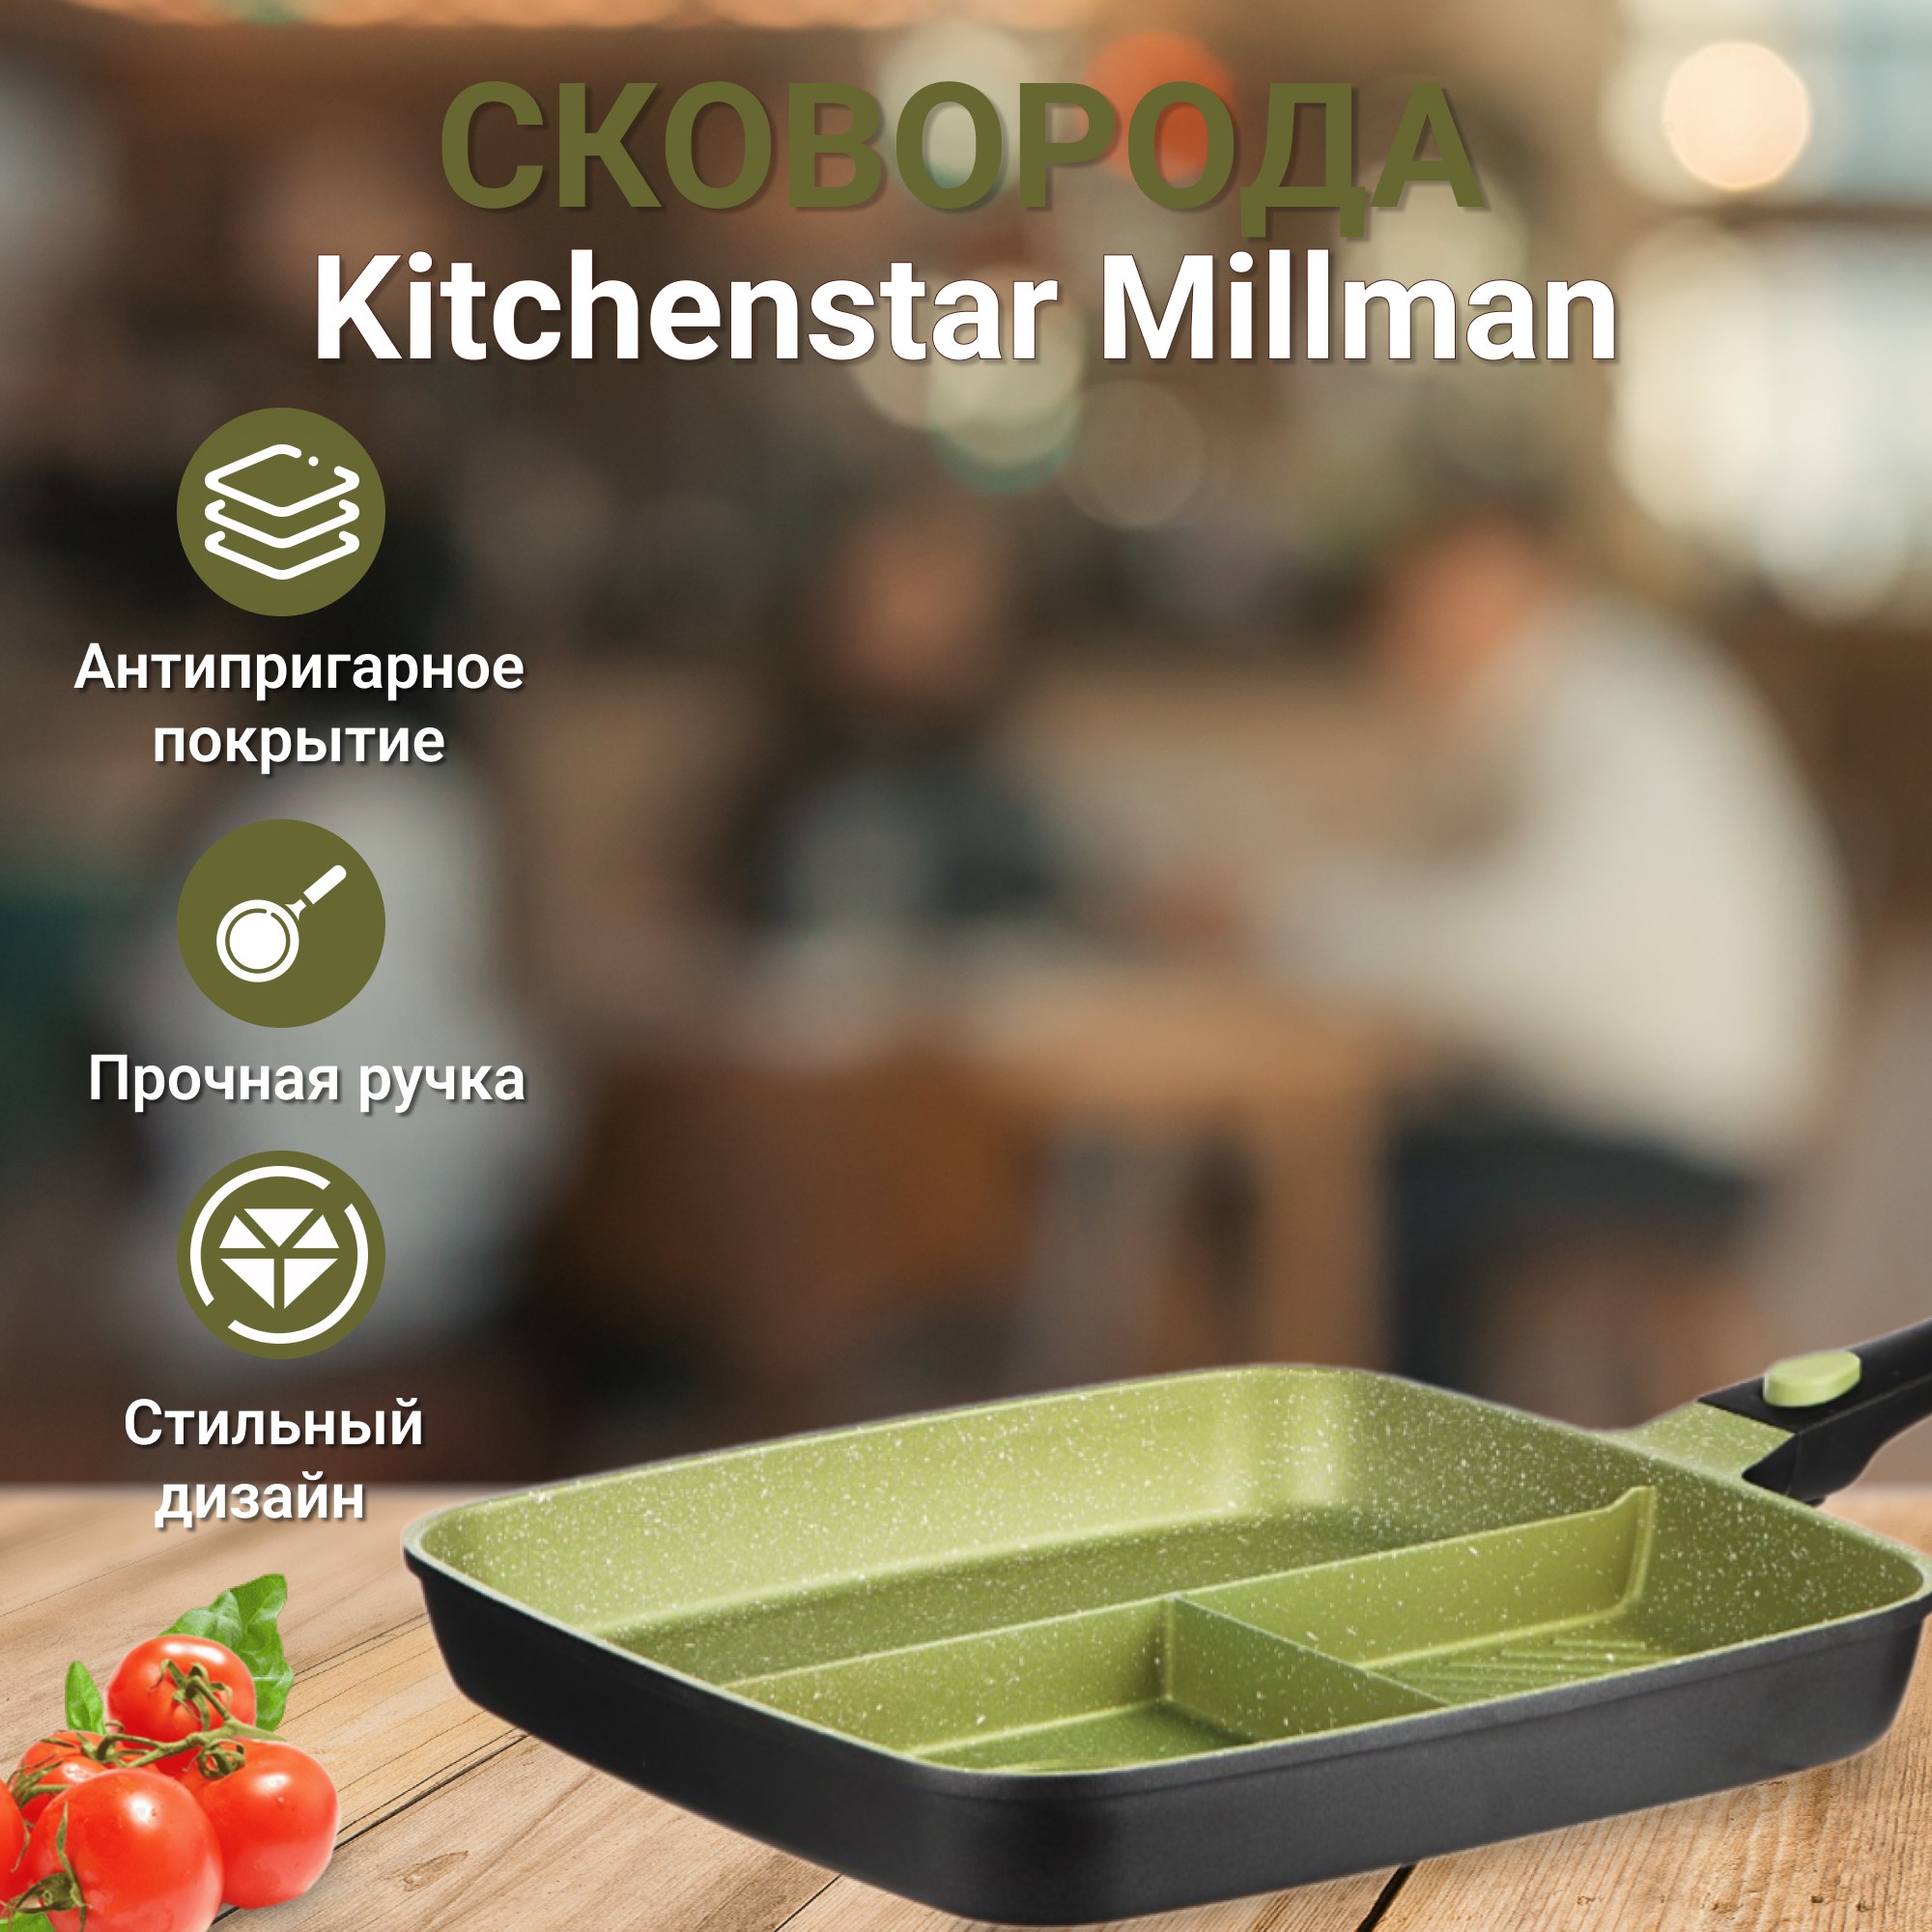 Сковорода Kitchen star Millman с отсеками 32x32x4,5, цвет зеленый - фото 2